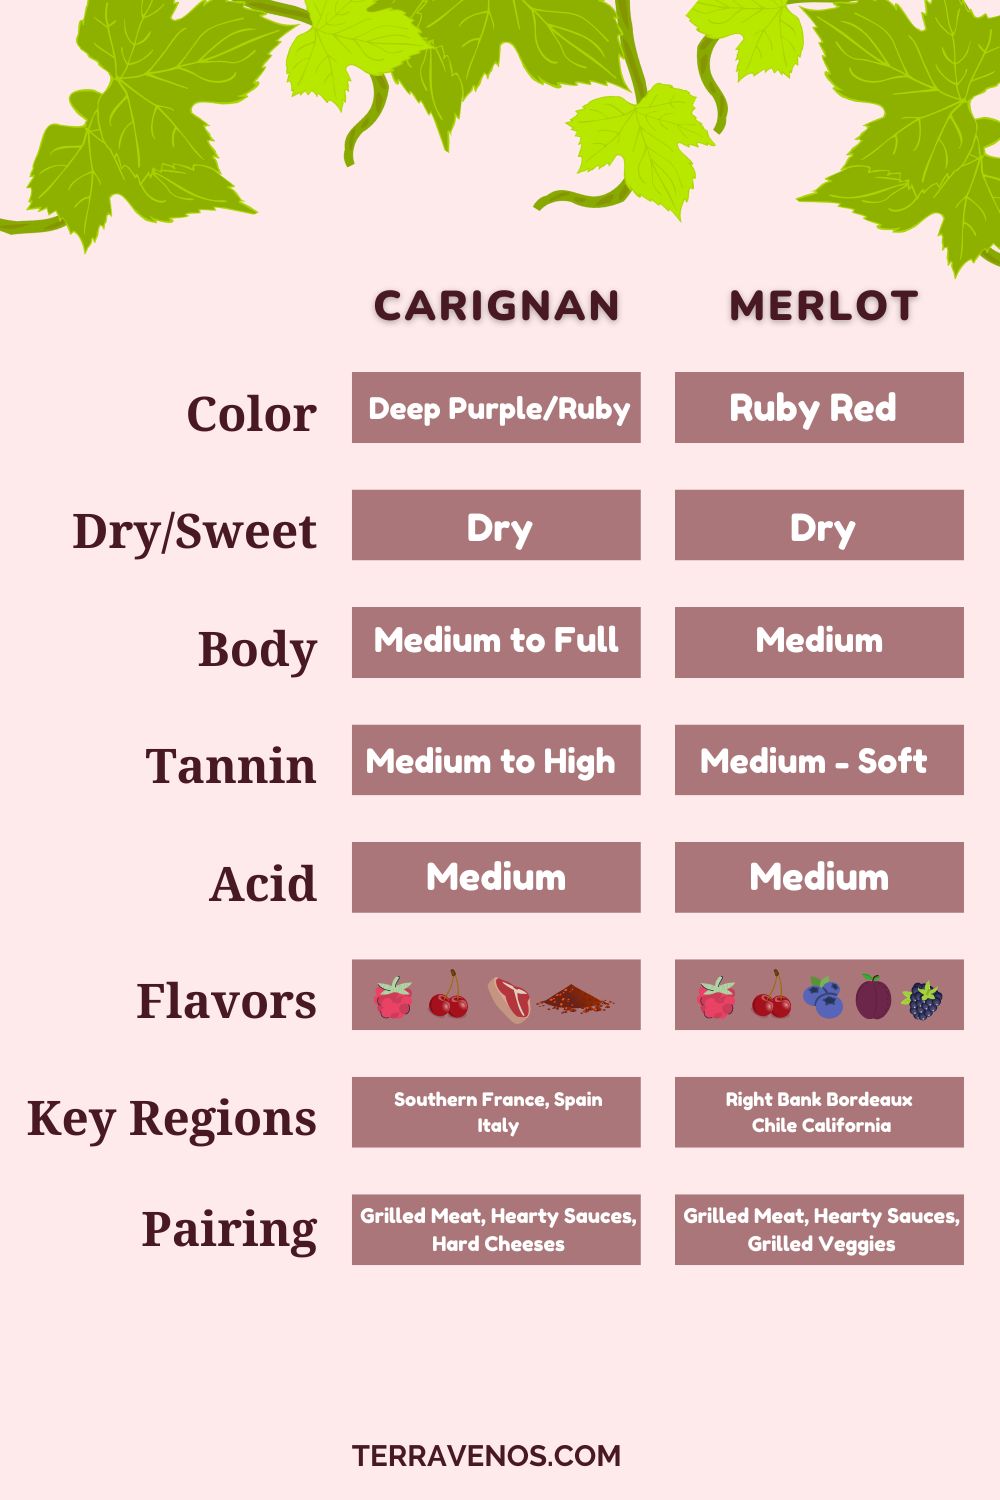 carignan-vs-merlot-comparison-infographic